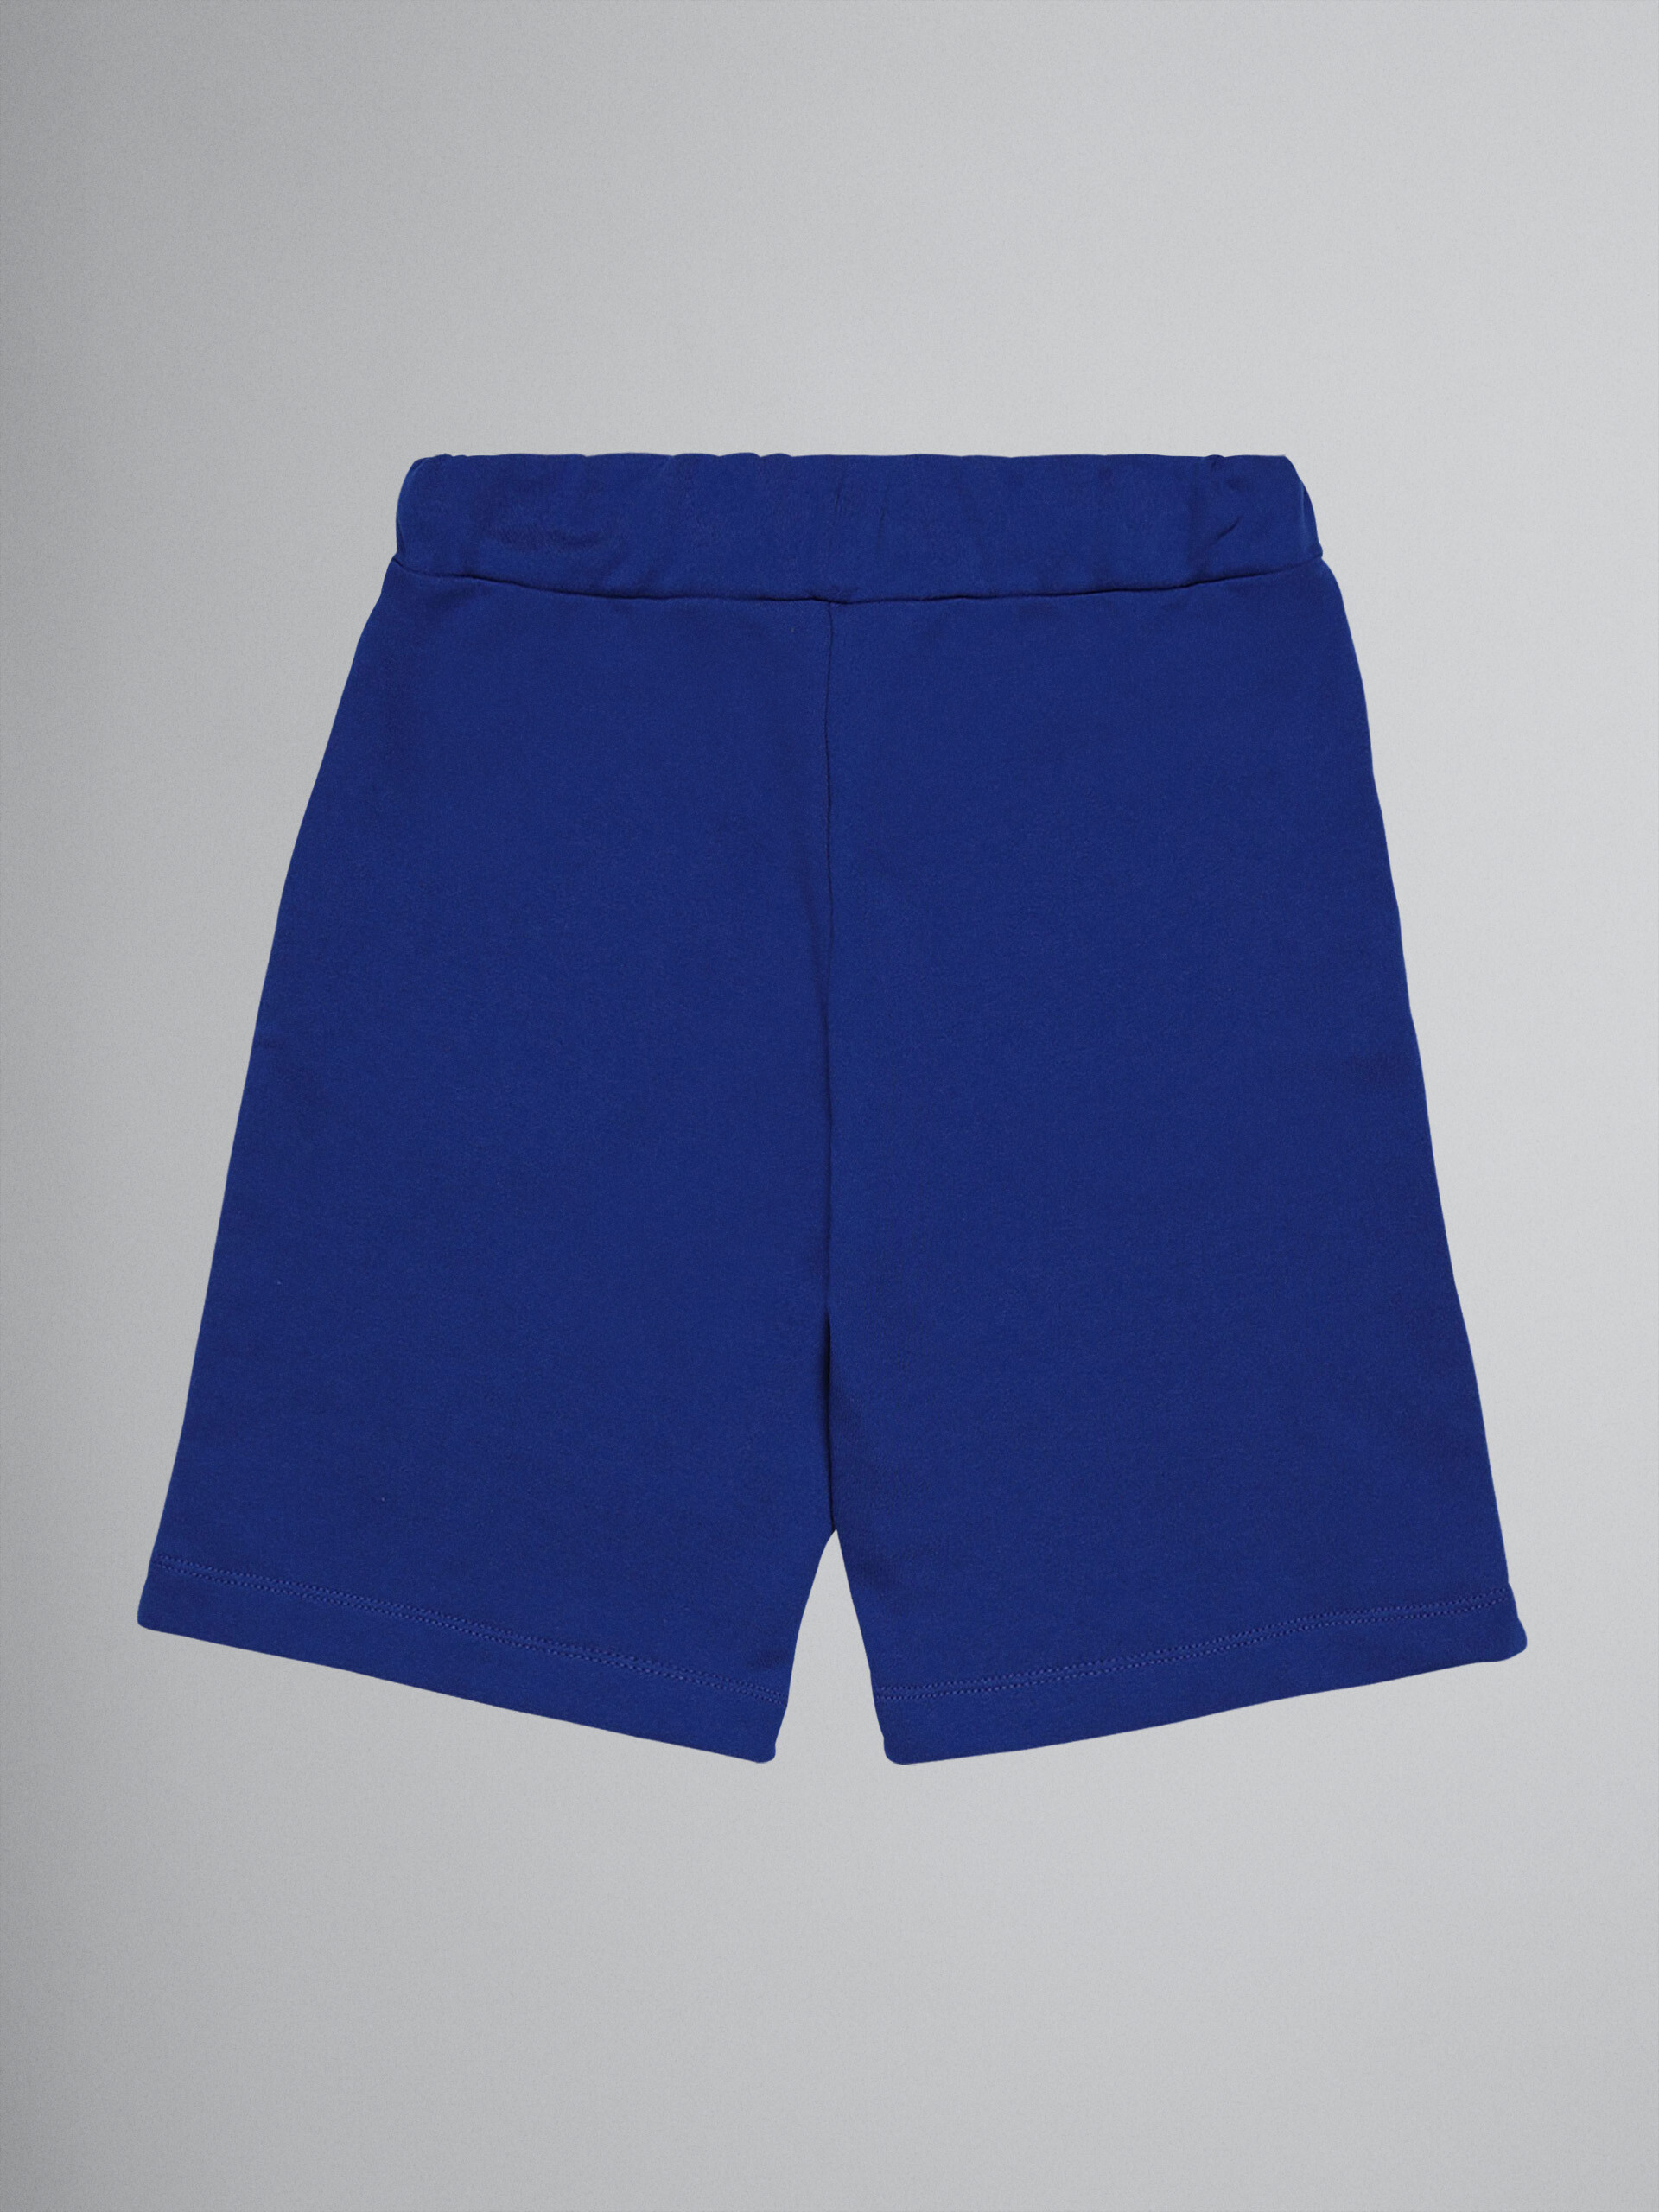 Blue maxi logo sweatshirt cotton short track pants - Pants - Image 2